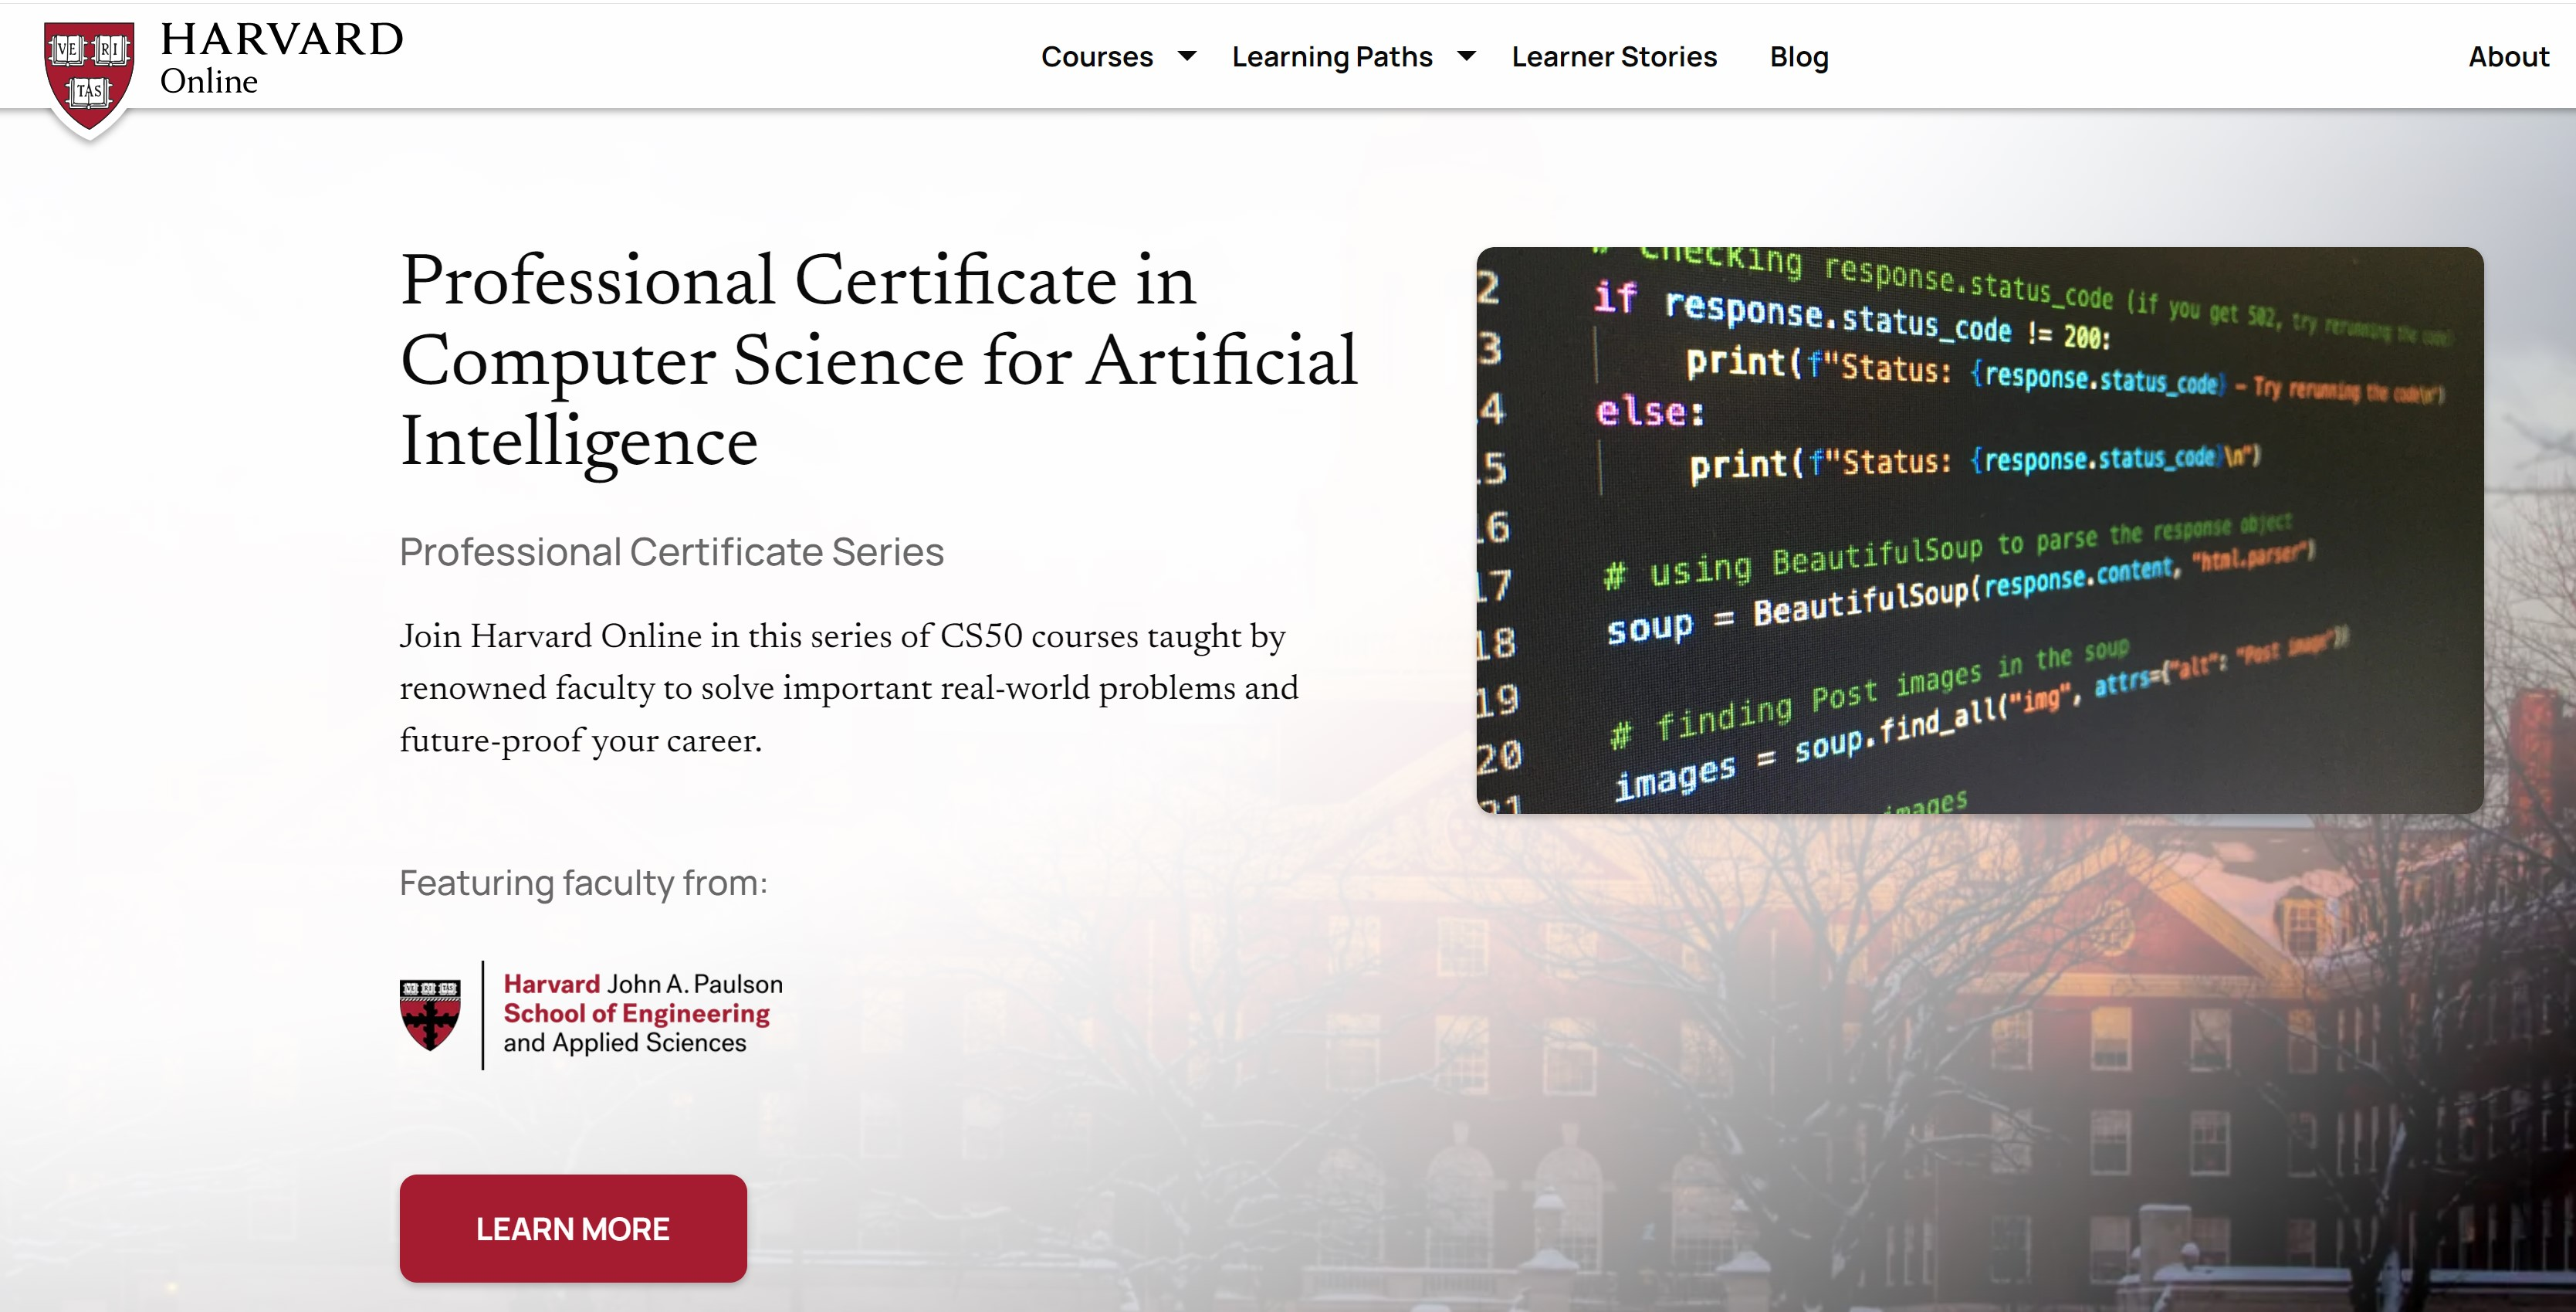 hardvard online artificial intelligence certification - homepage screenshot